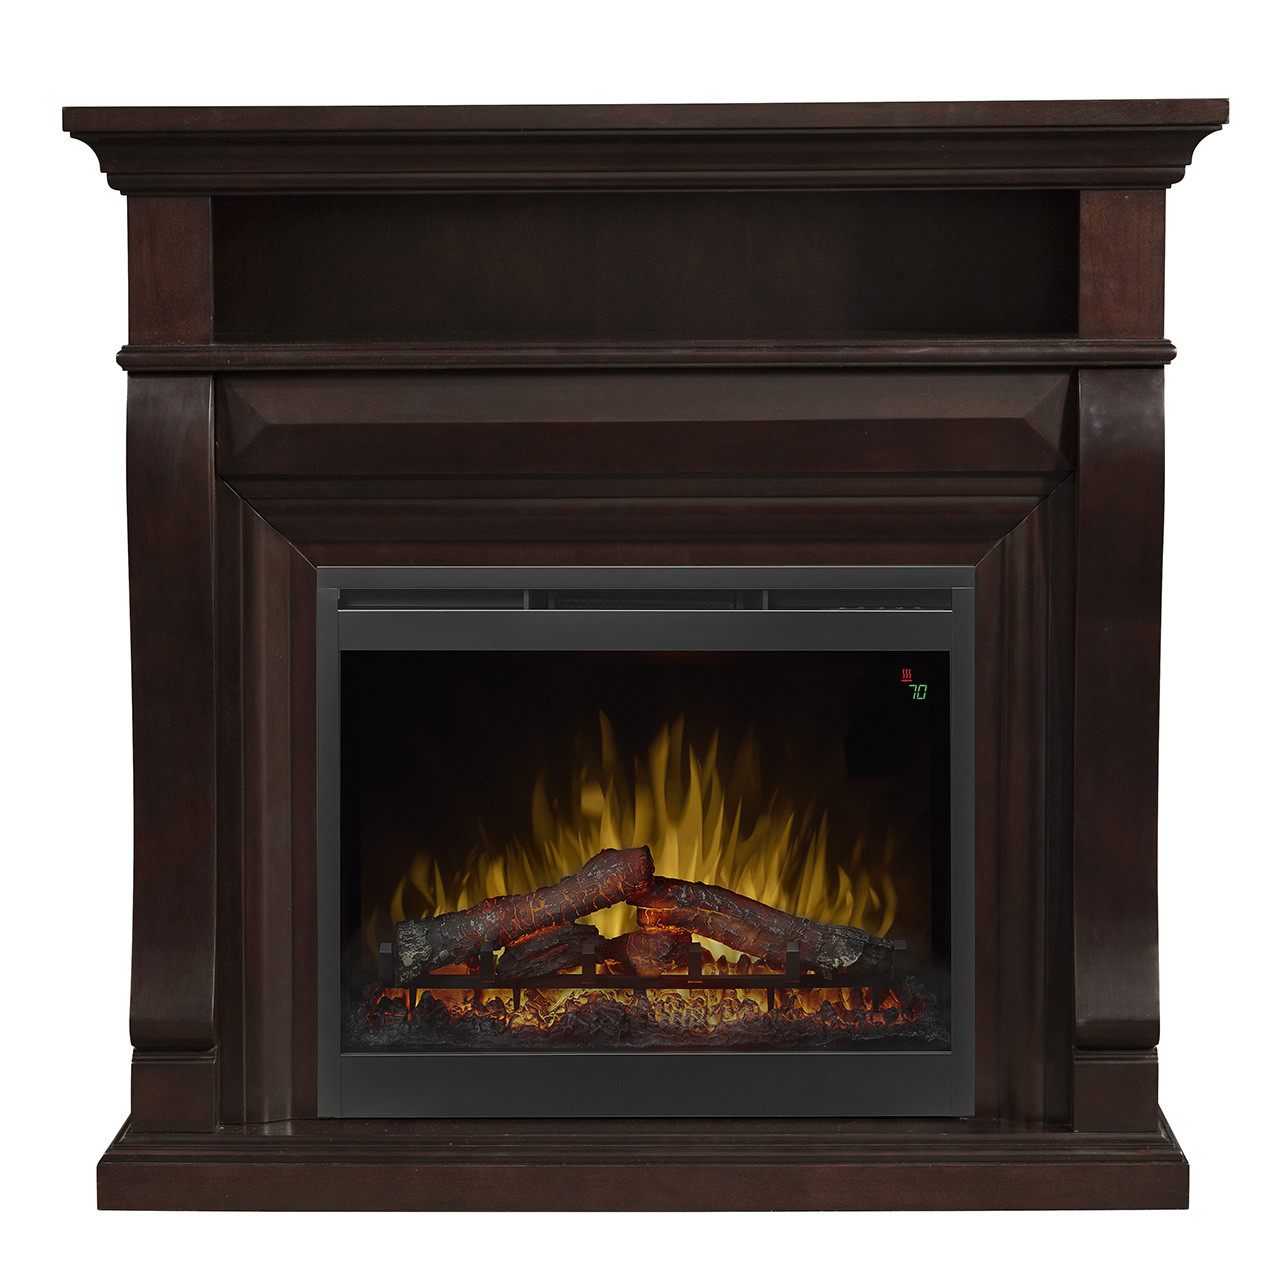 Best ideas about Electric Fireplace Mantel
. Save or Pin Dimplex Electric Fireplaces Mantels Products Noah Now.